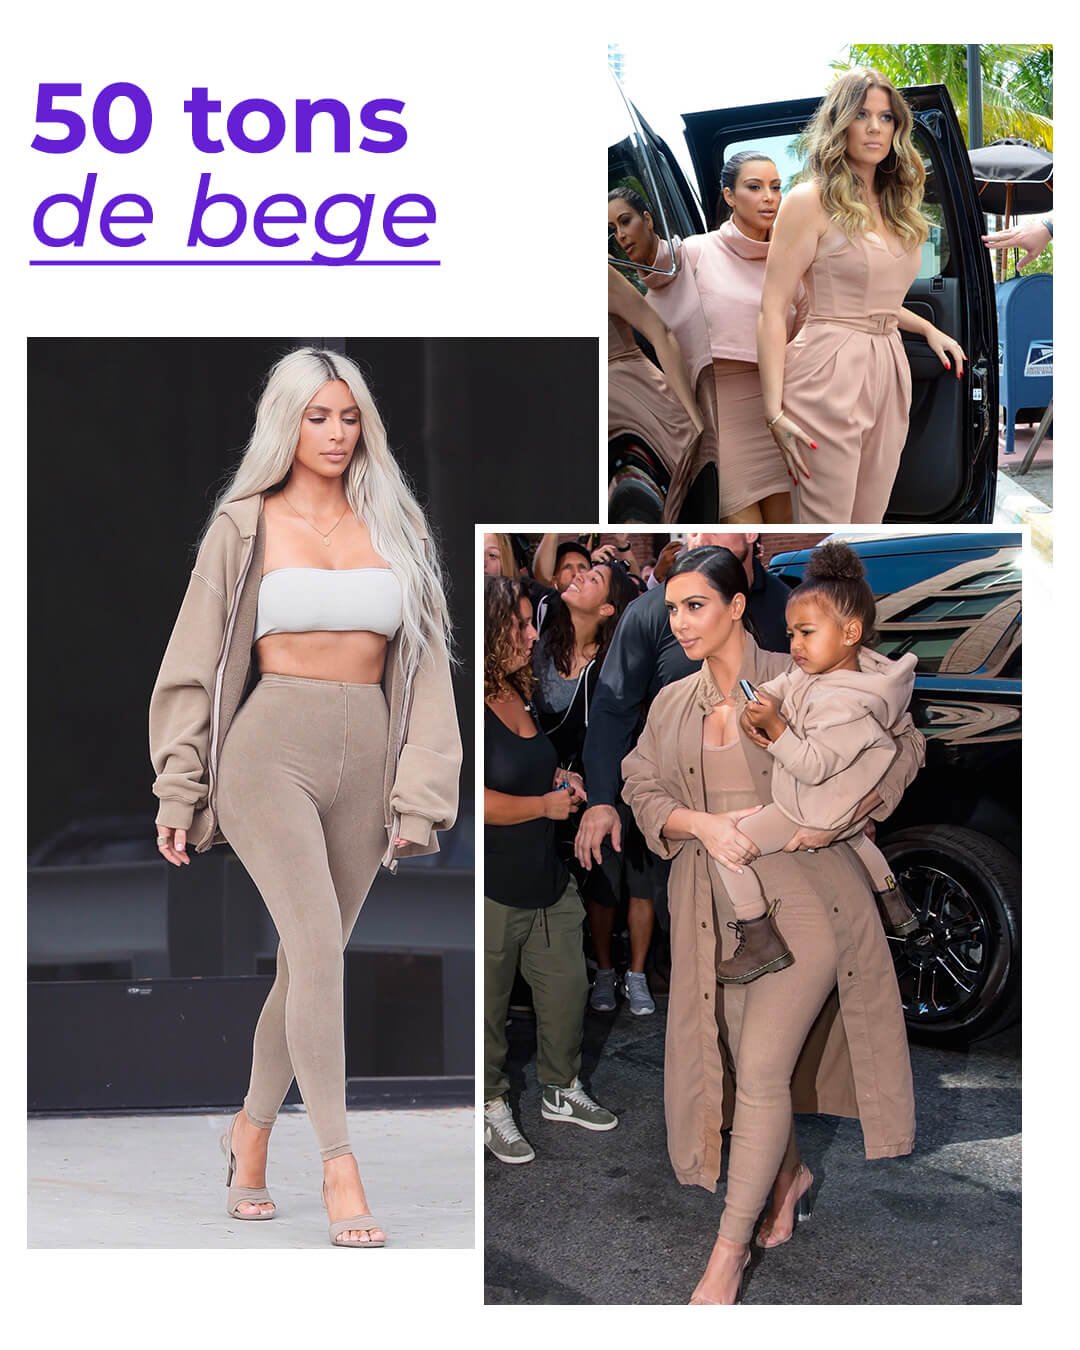 It girls - Bege - Kardashians - Verão - Street Style - https://stealthelook.com.br